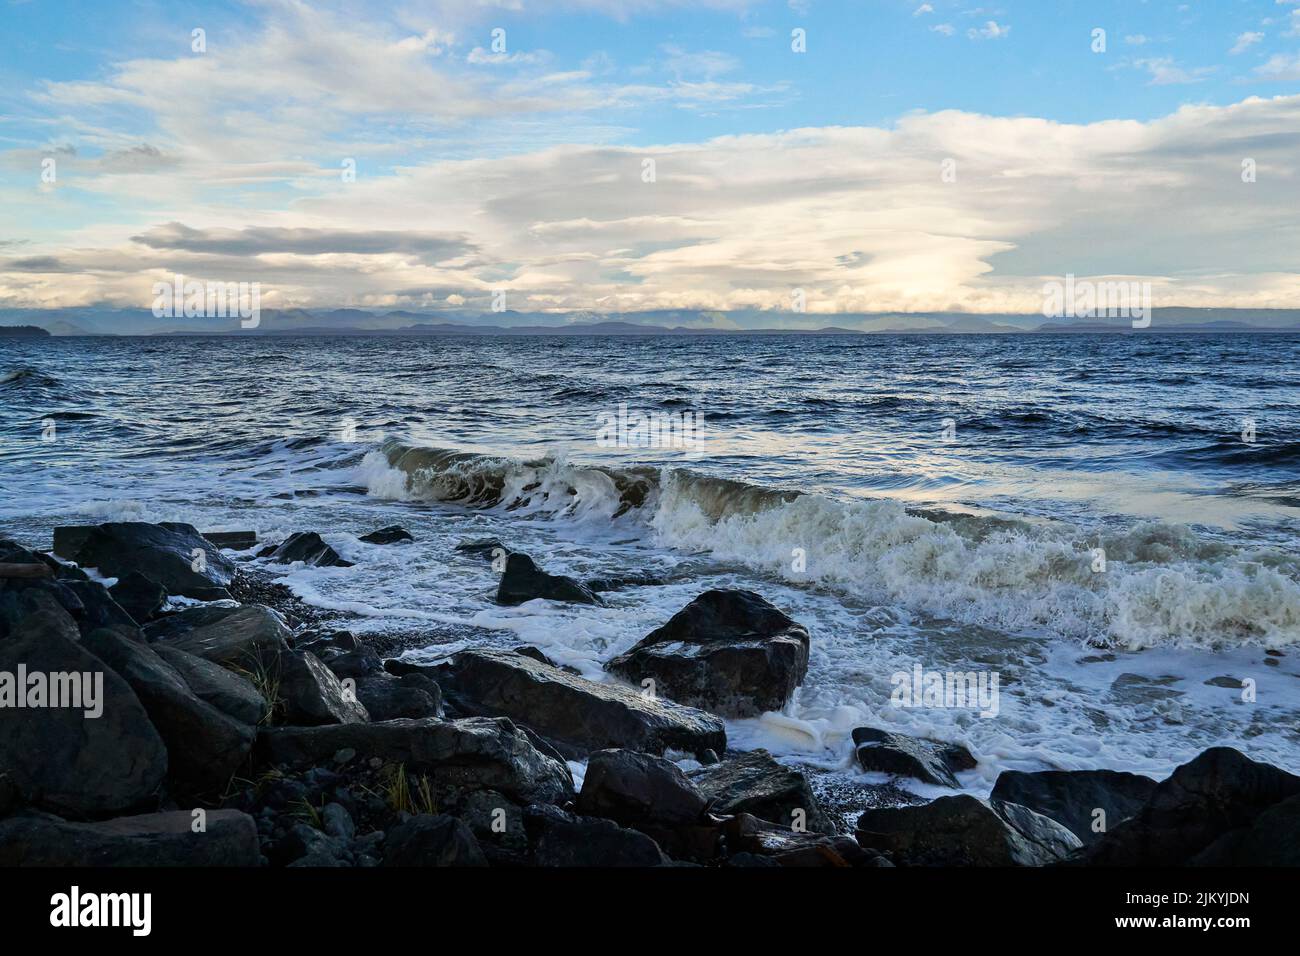 A stormy winter day at an ocean beach. Waves crashing into the dark rocky beach. Stock Photo